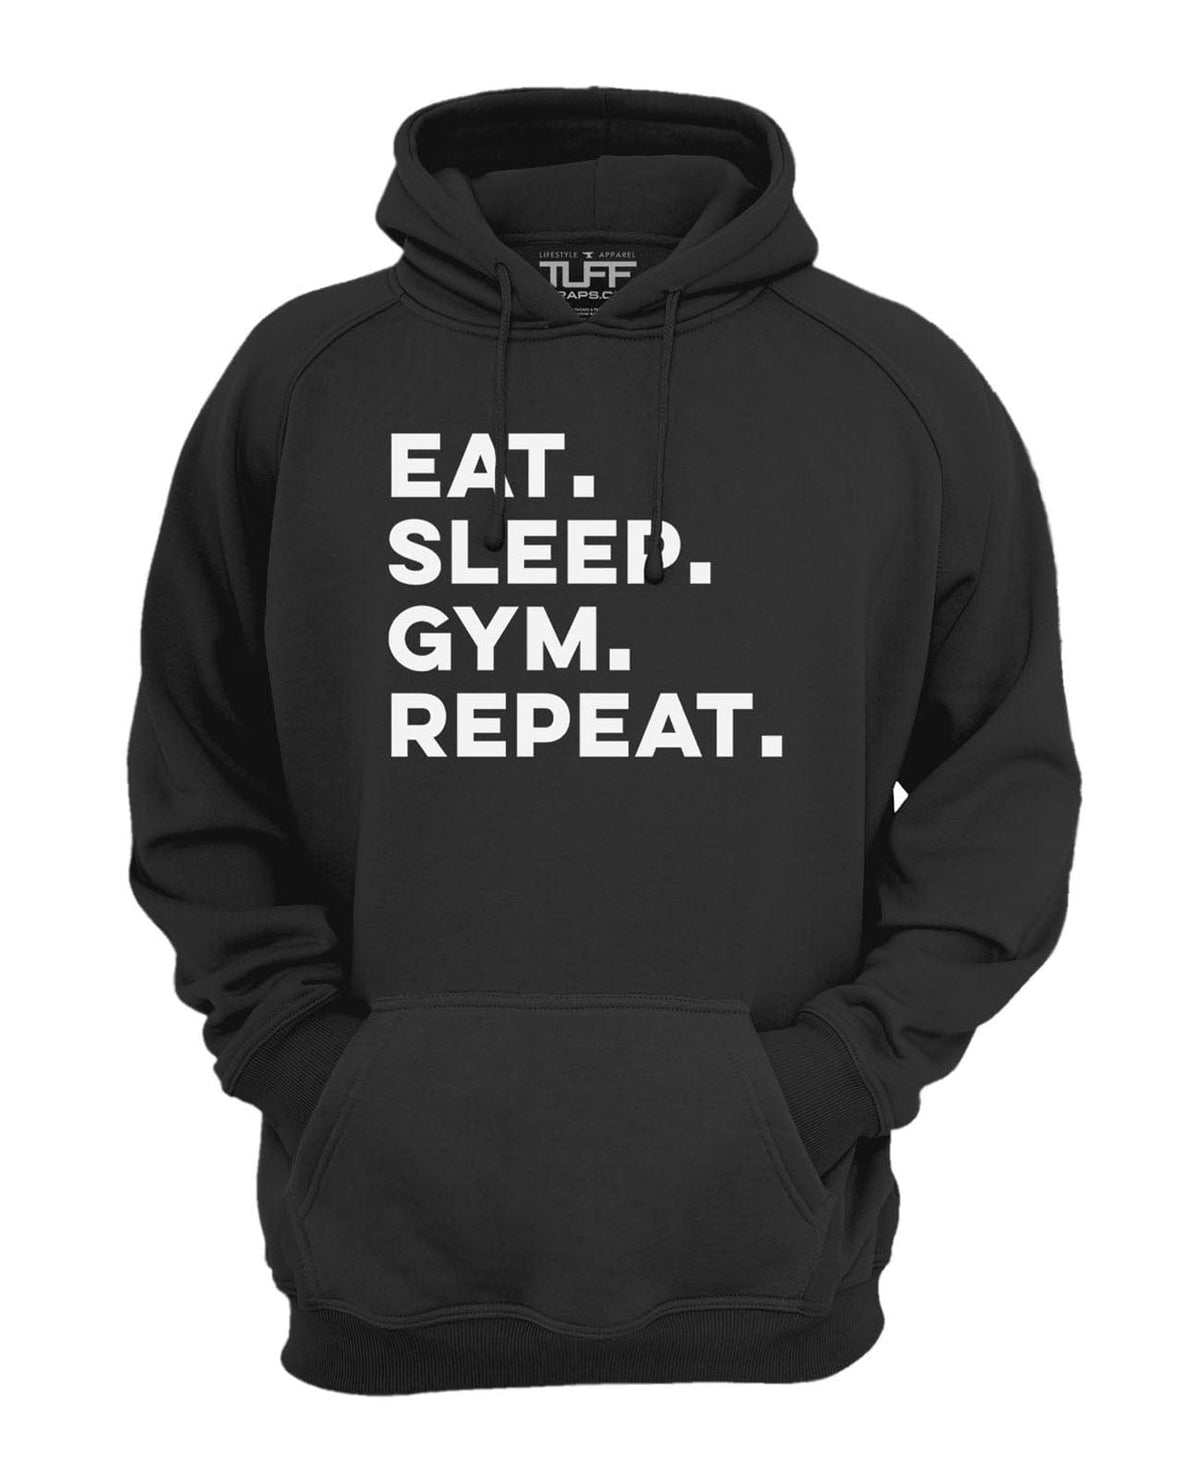 Eat. Sleep. Gym. Repeat. Hooded Sweatshirt XS / Black TuffWraps.com